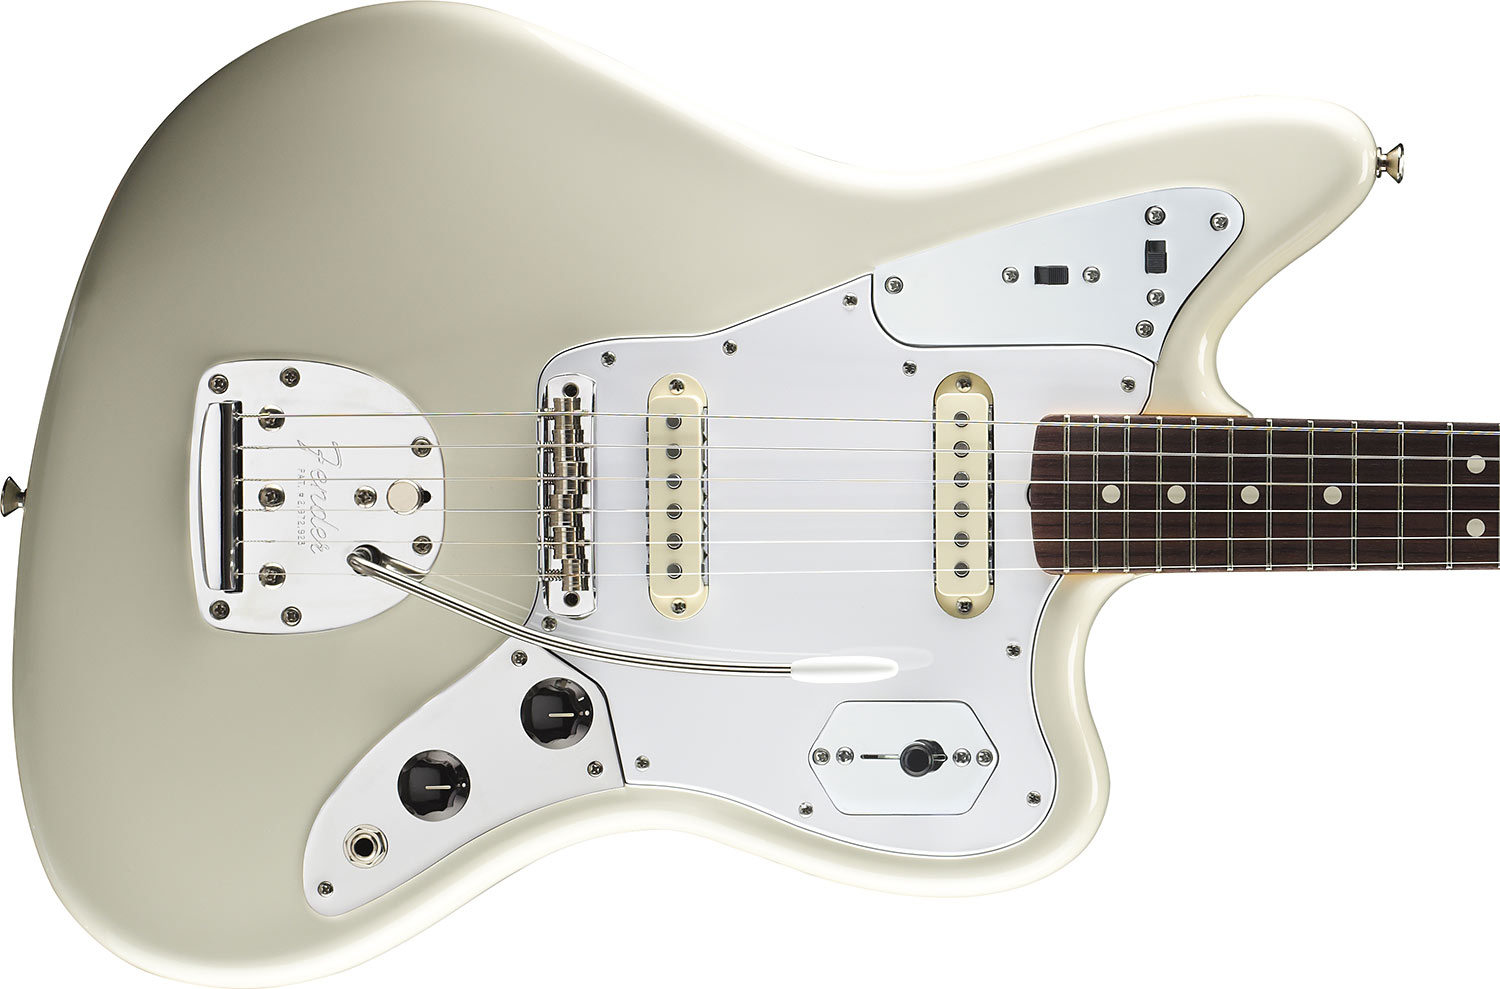 Fender Jaguar Johnny Marr Artist Usa Rw 2016 - Olympic White - Retro rock electric guitar - Variation 2